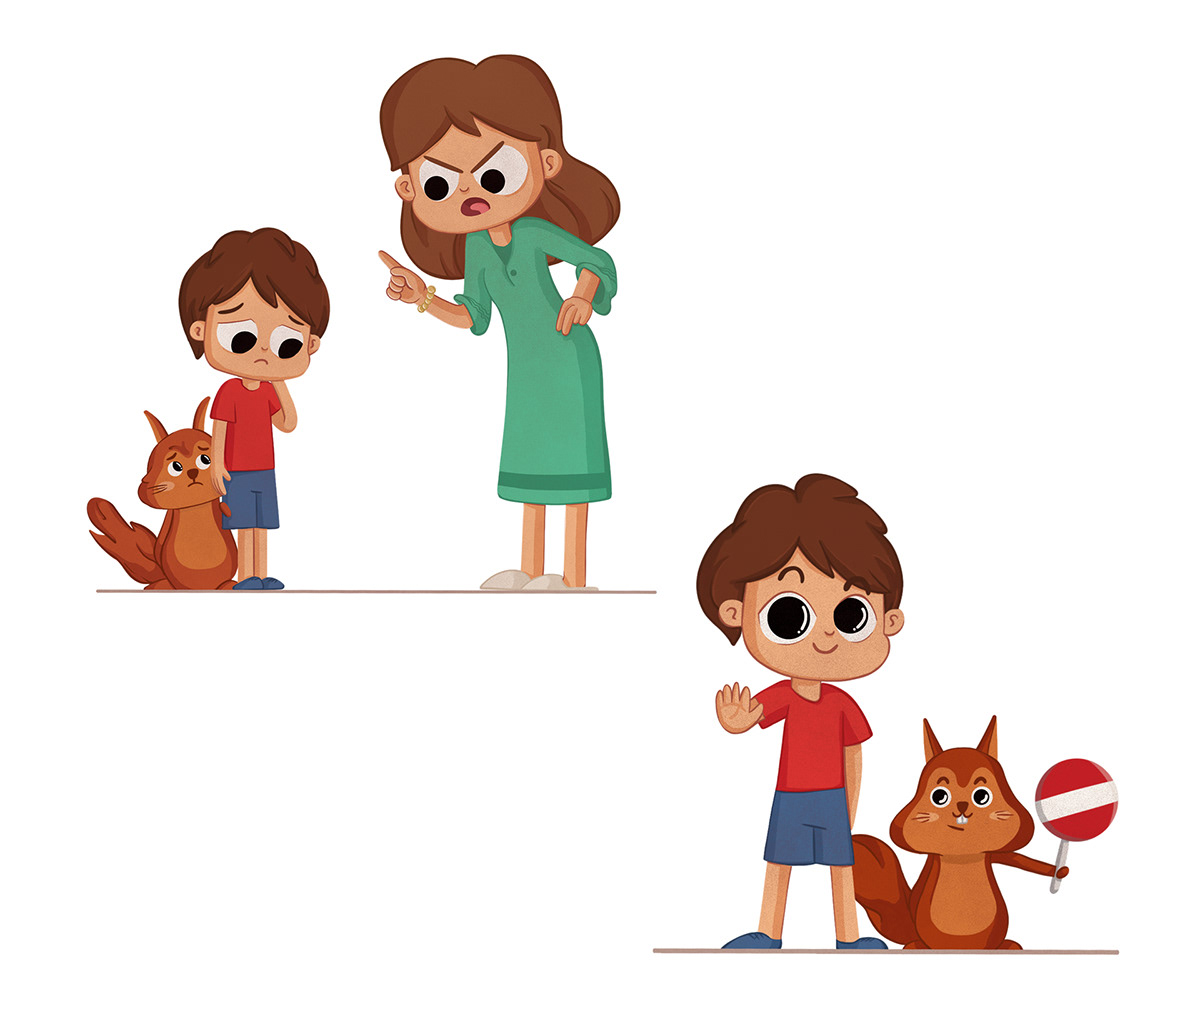 animation  artwork book illustration cartoon Character design  children children's book children's illustration comic illustrations